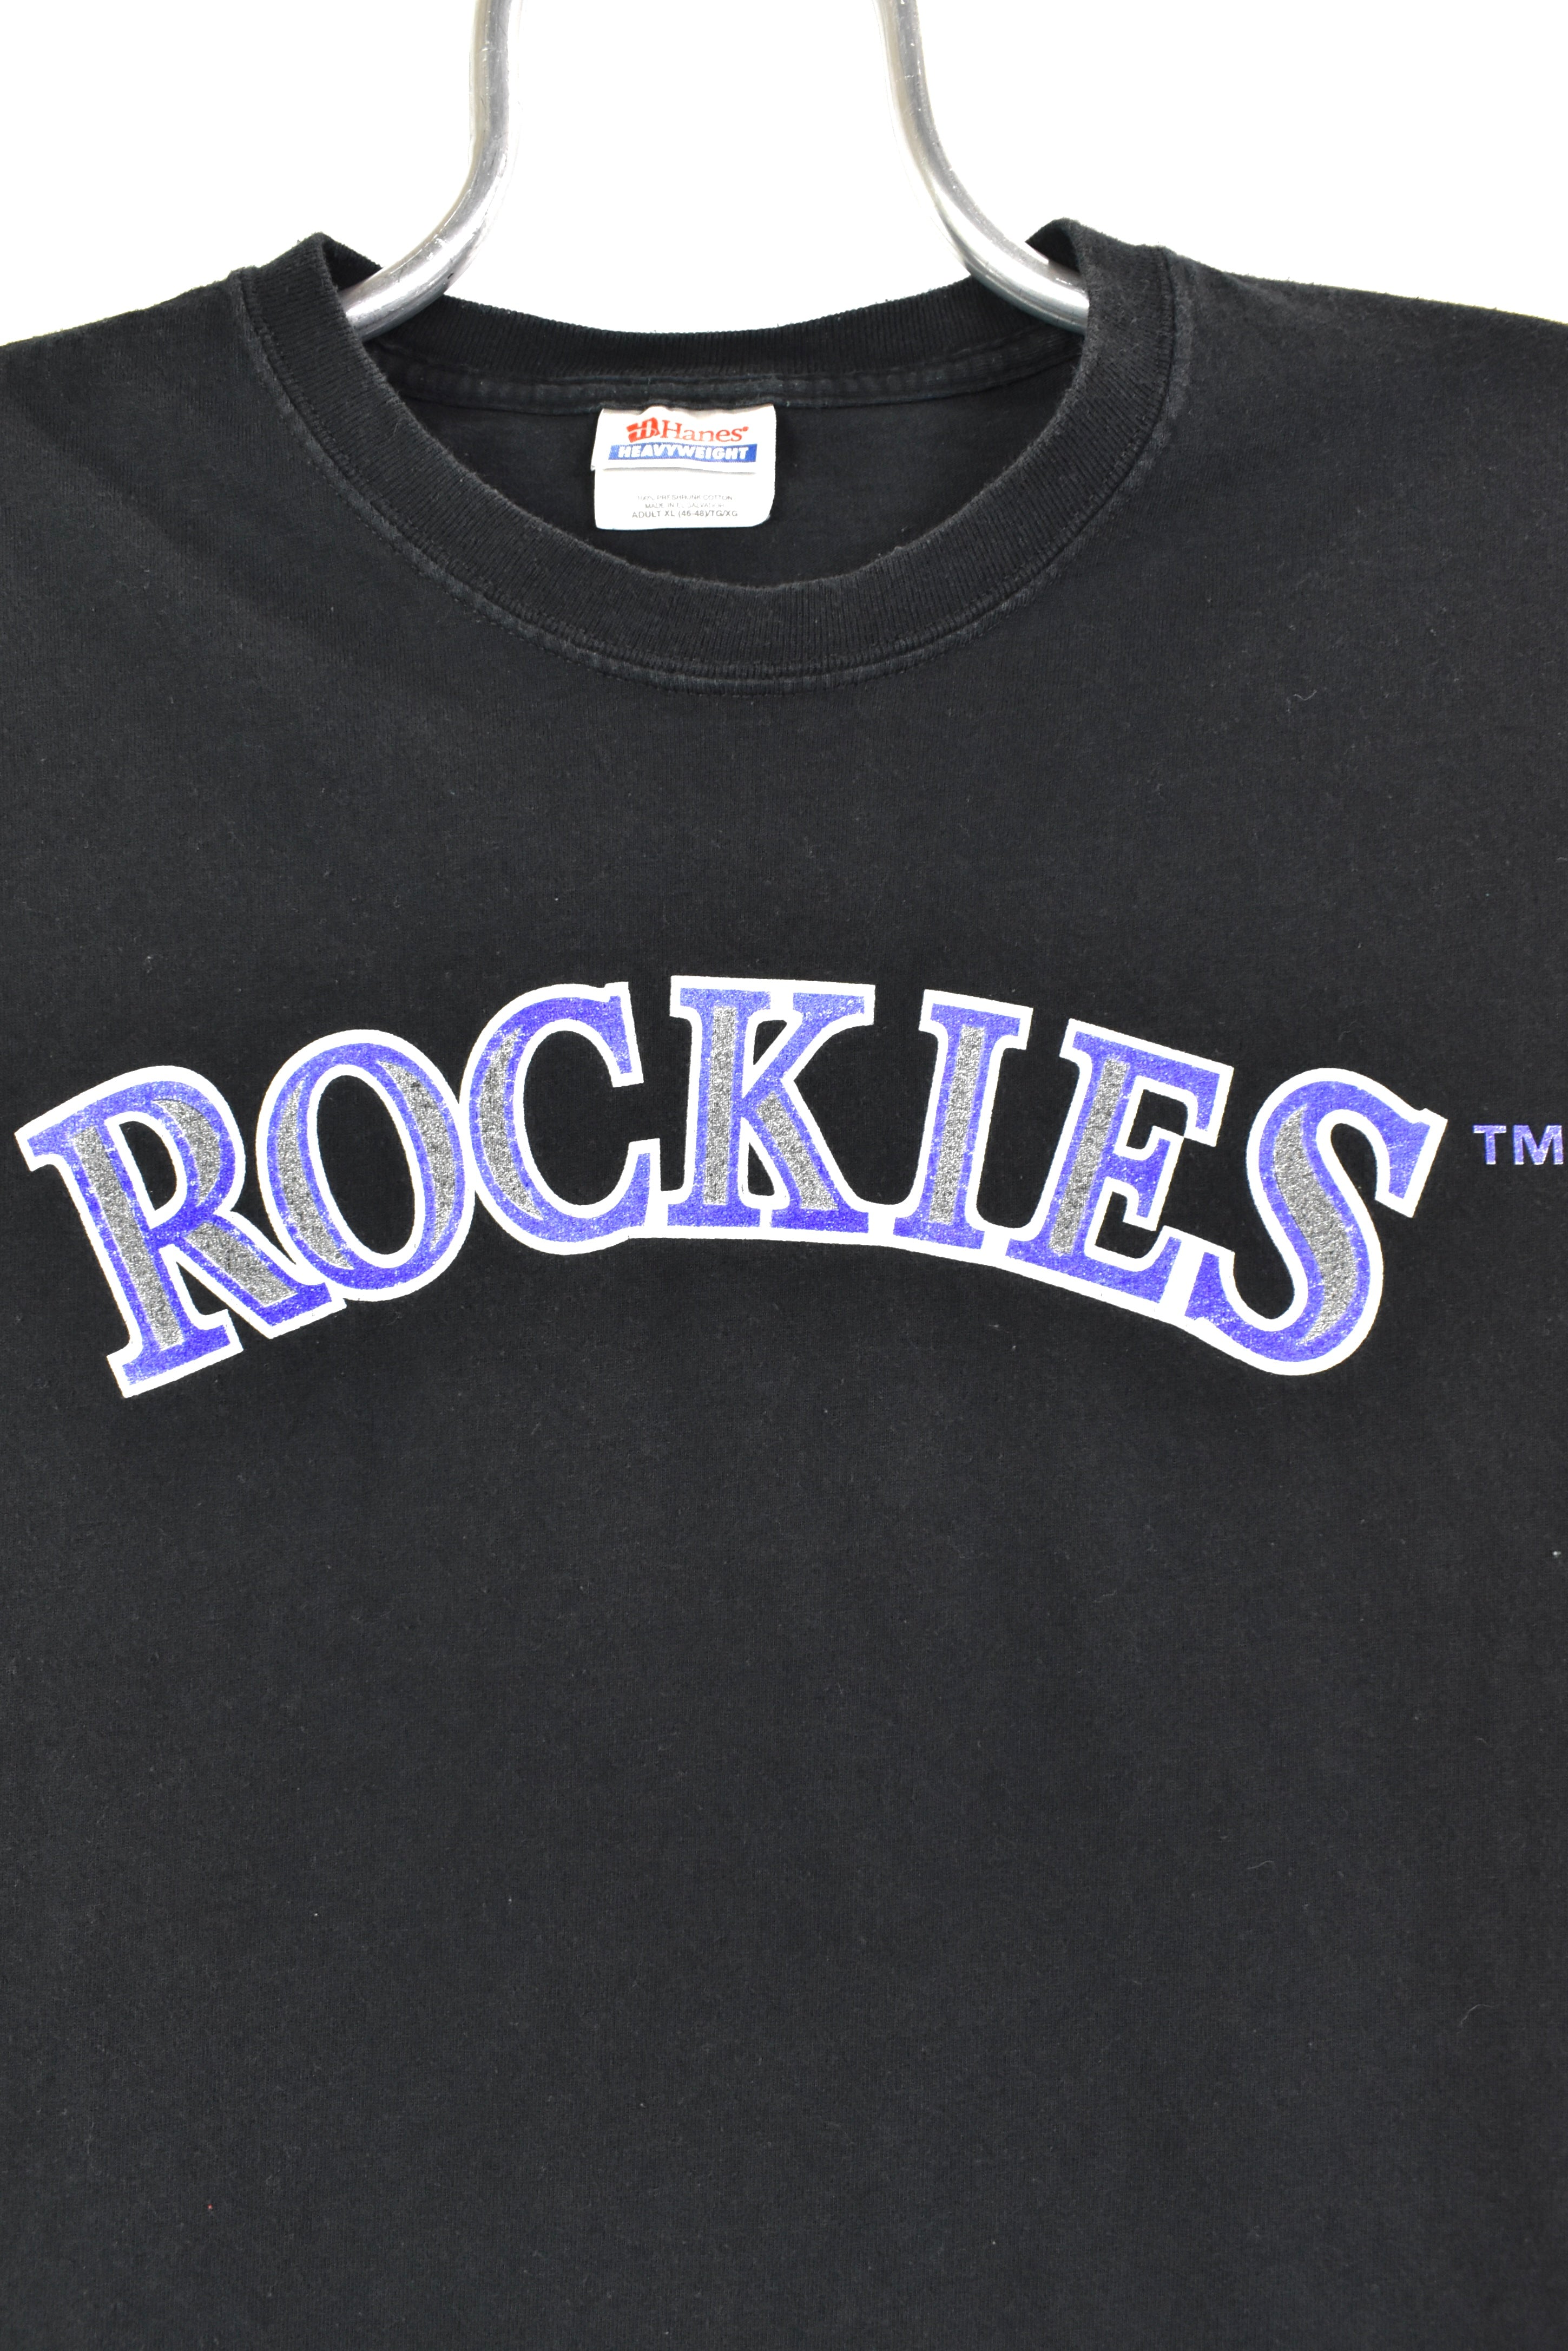 MLB Colorado Rockies Baseball Black adult Medium T-shirt